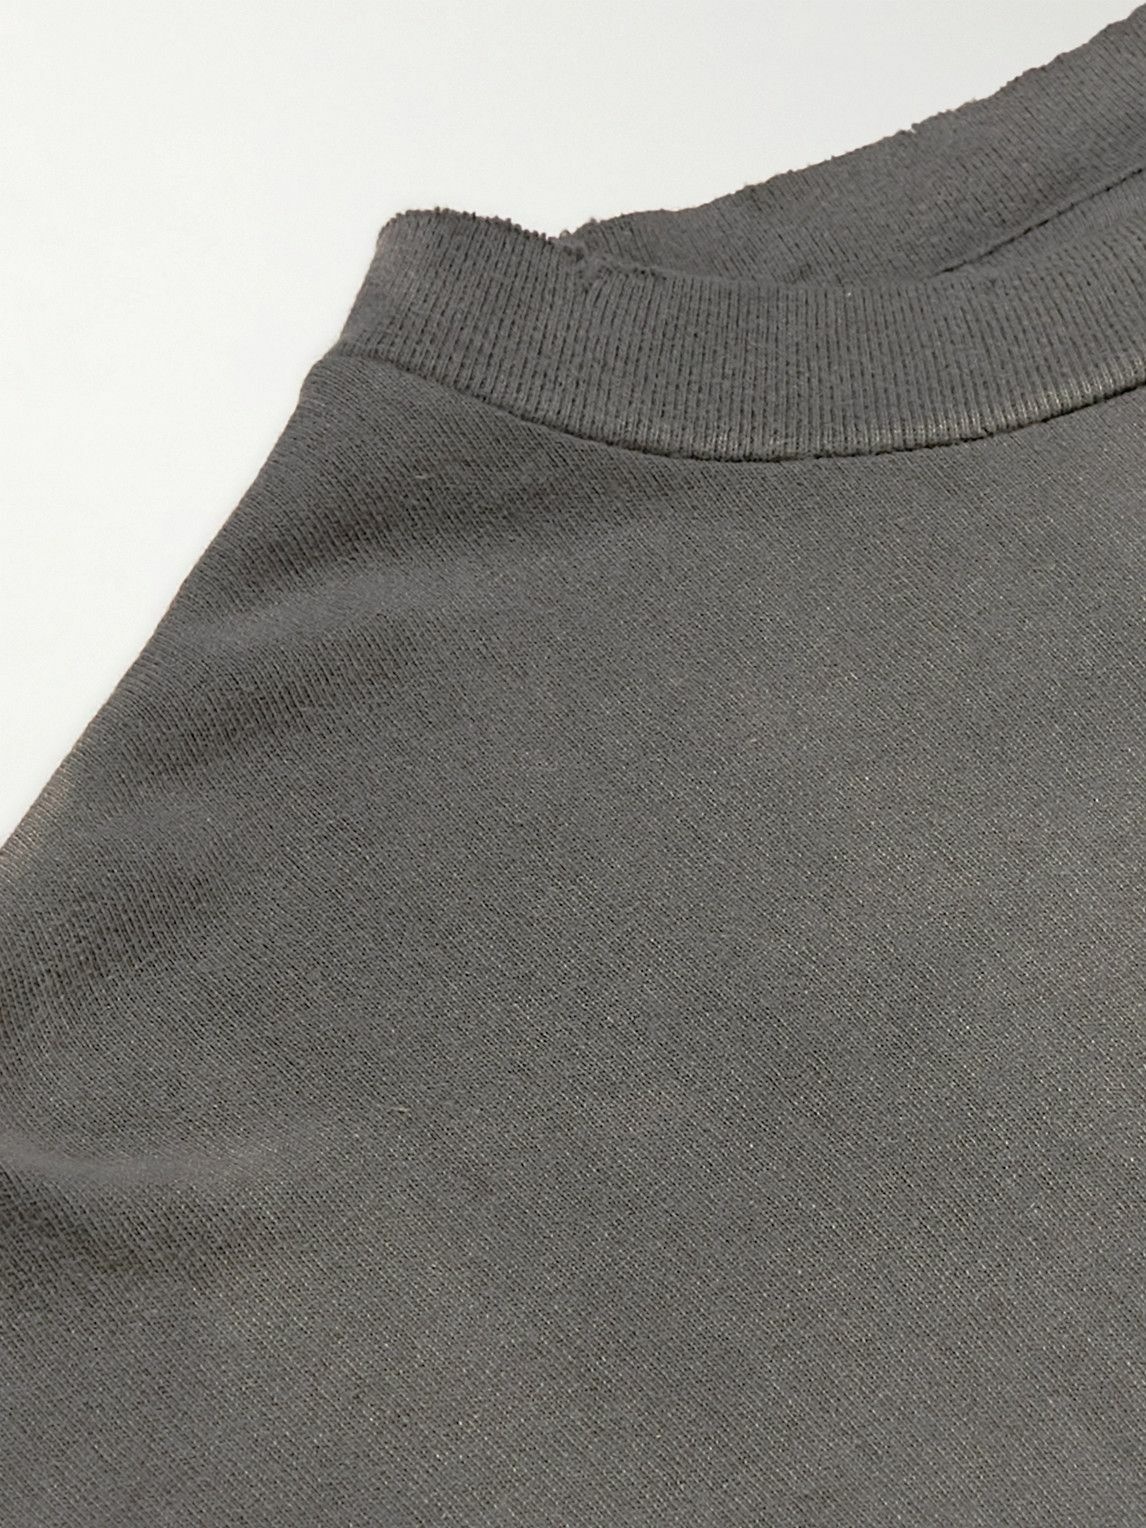 SAINT Mxxxxxx - Vlone Printed Cotton-Jersey T-Shirt - Gray